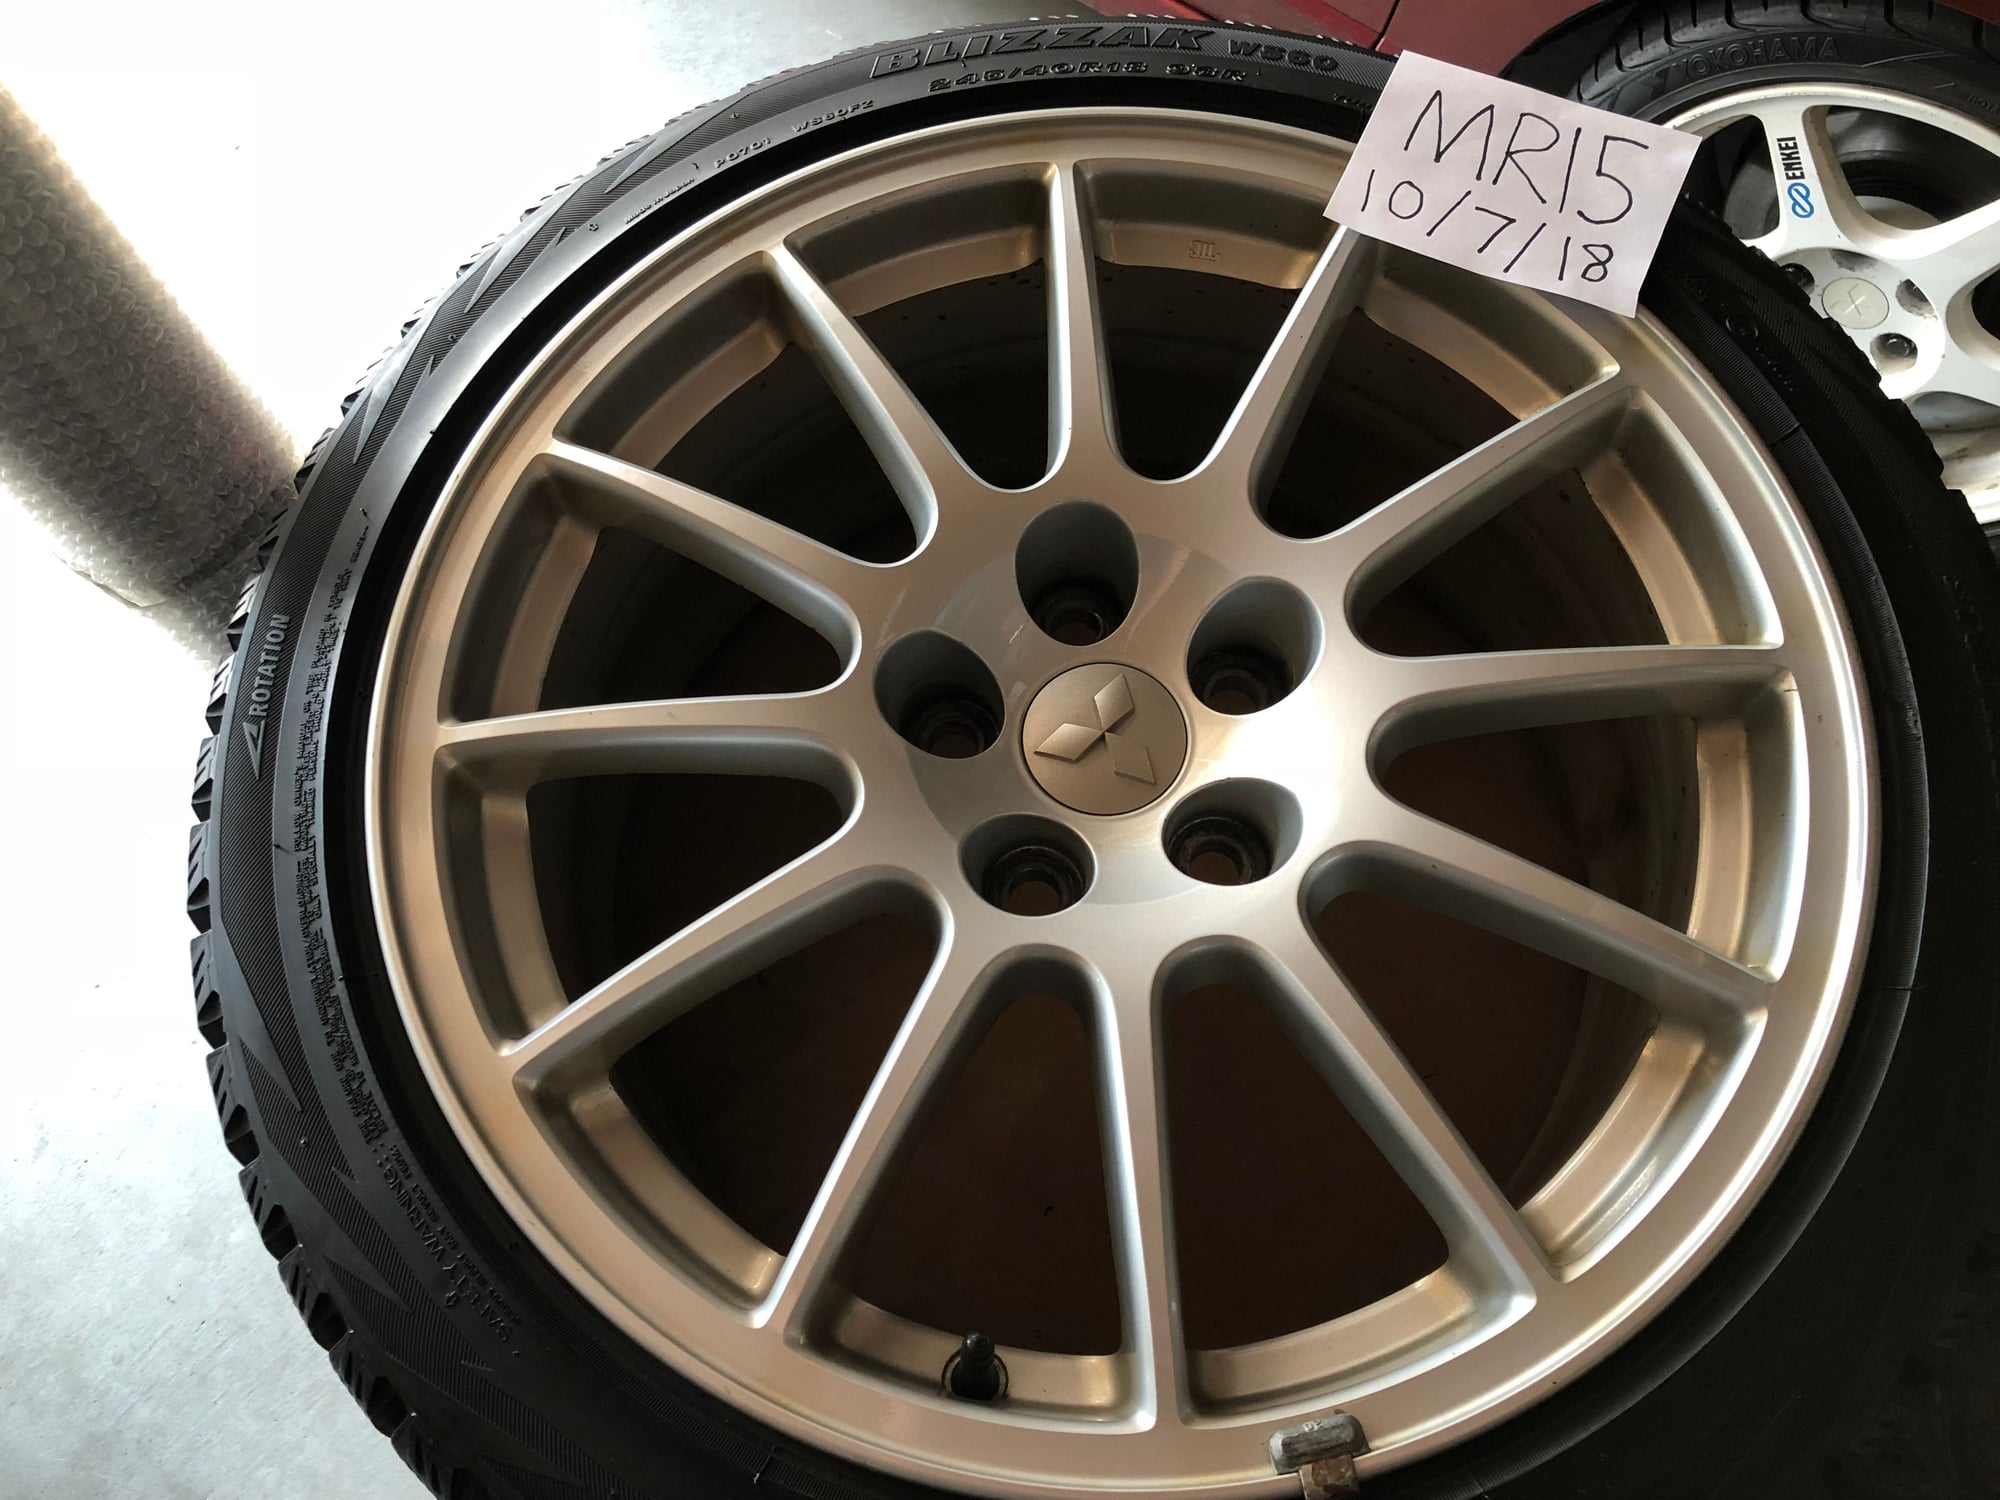 Wheels and Tires/Axles - EVO X GSR Rims W/ Blizzak W60 Winter Tires - Used - 2008 to 2015 Mitsubishi Lancer Evolution - Pittsburgh, PA 15201, United States